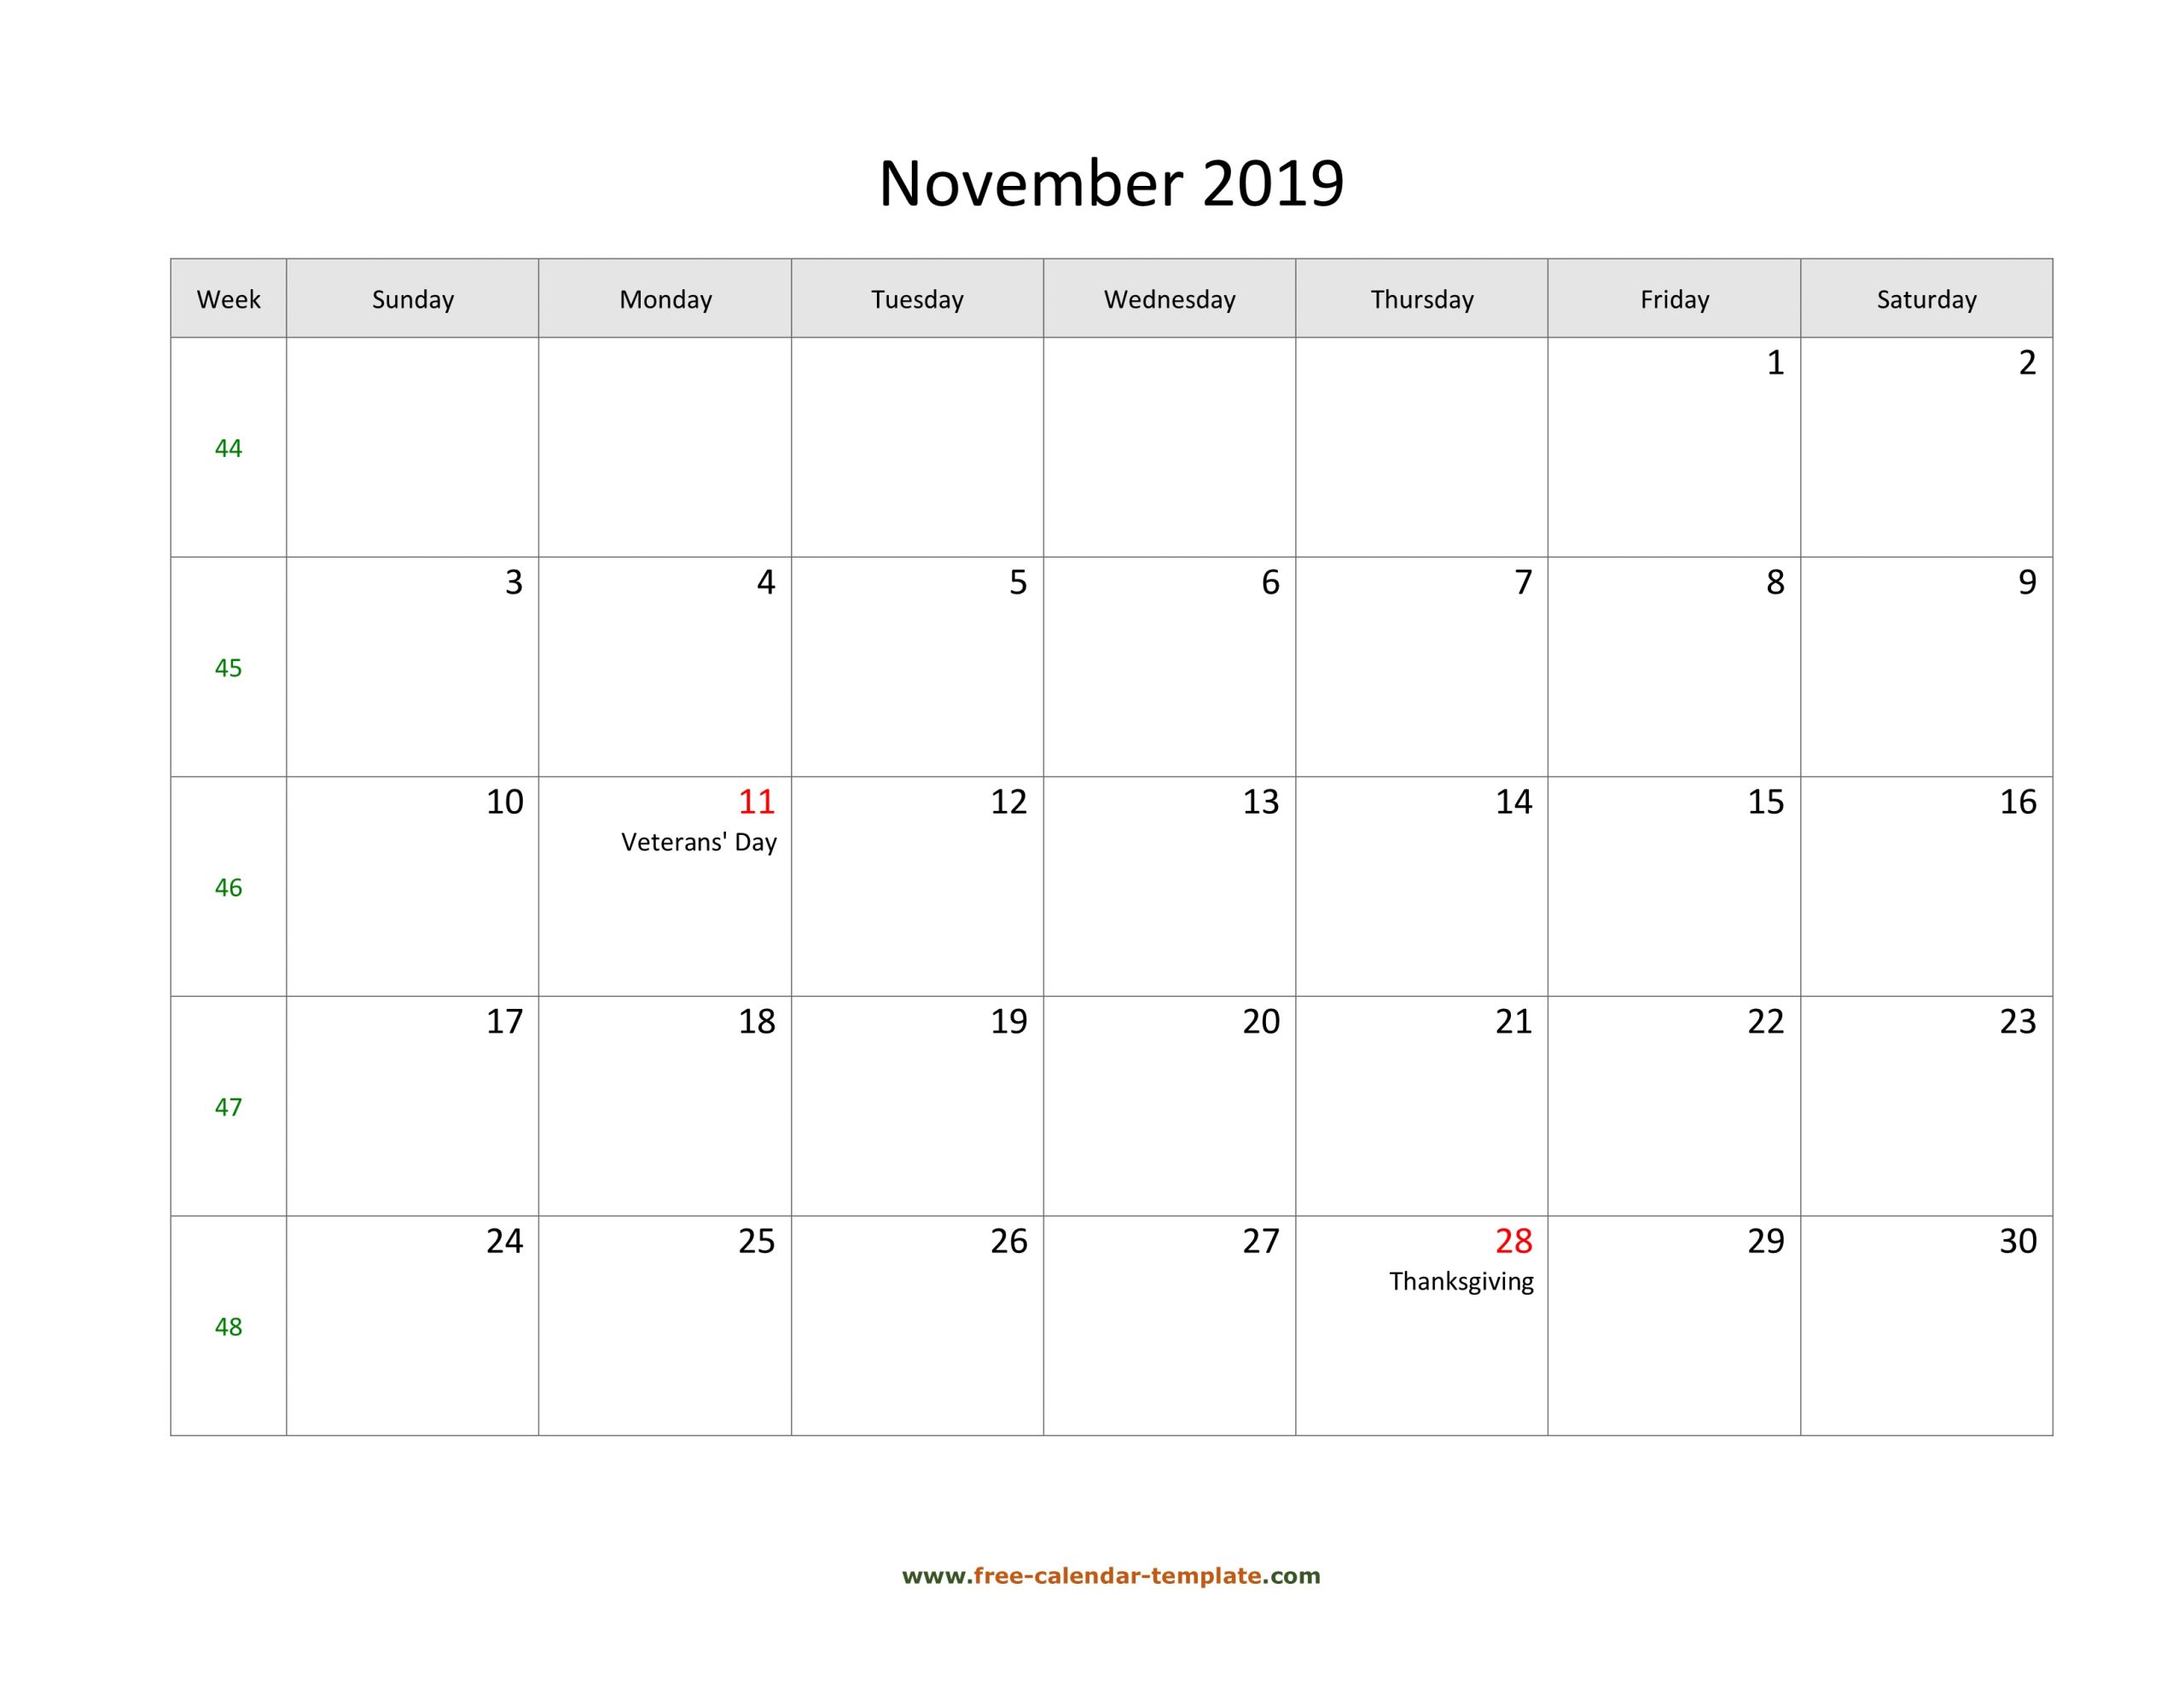 November 2019 Free Calendar Tempplate | Free-Calendar